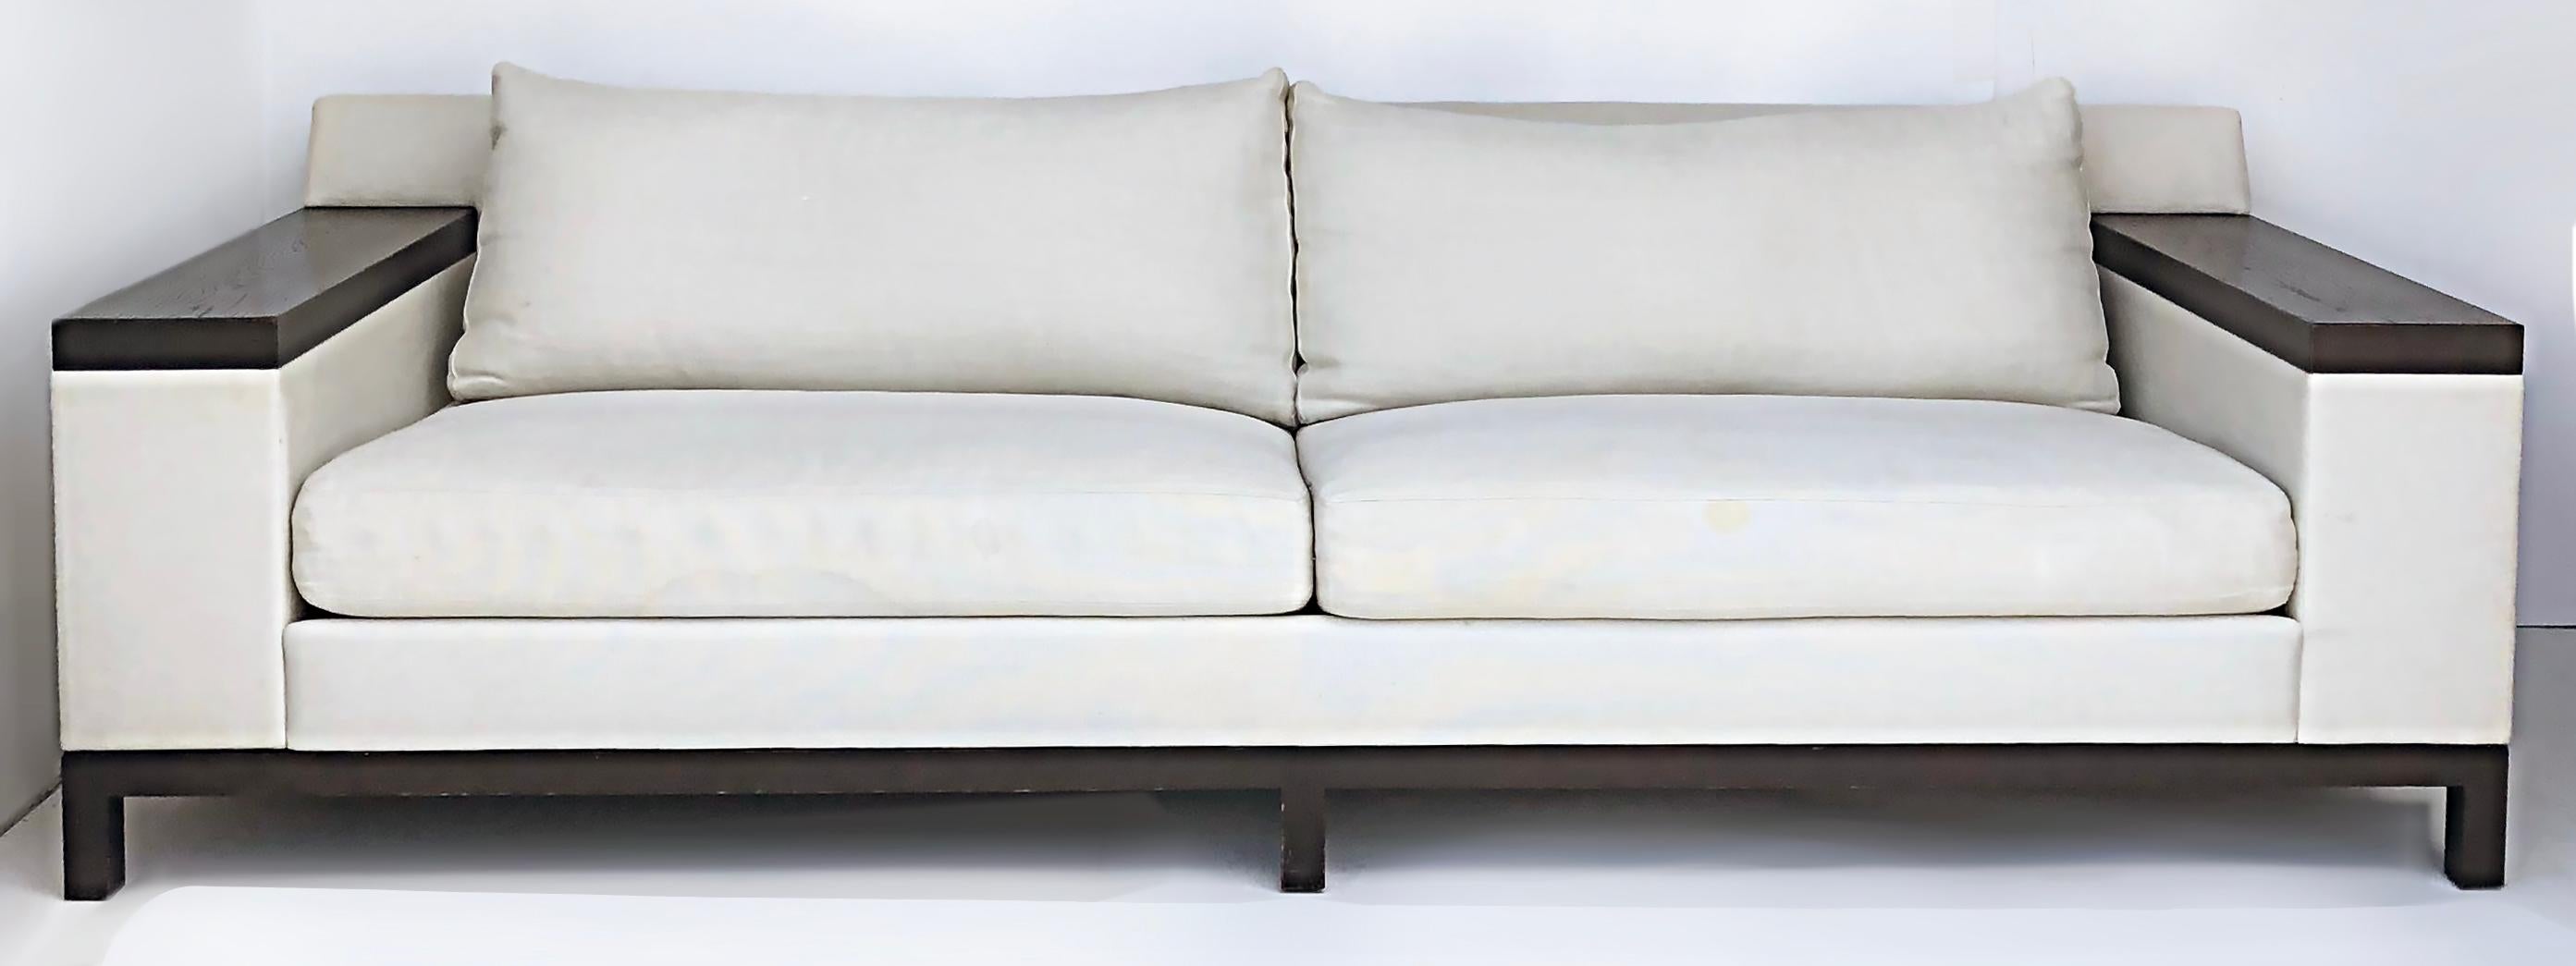 Christian Liaigre Beluga Sofa, Ebonized Wood w/Liaigre Belgian Linen Upholstery

Offered for sale is a Christian Liaigre ebonized wood 